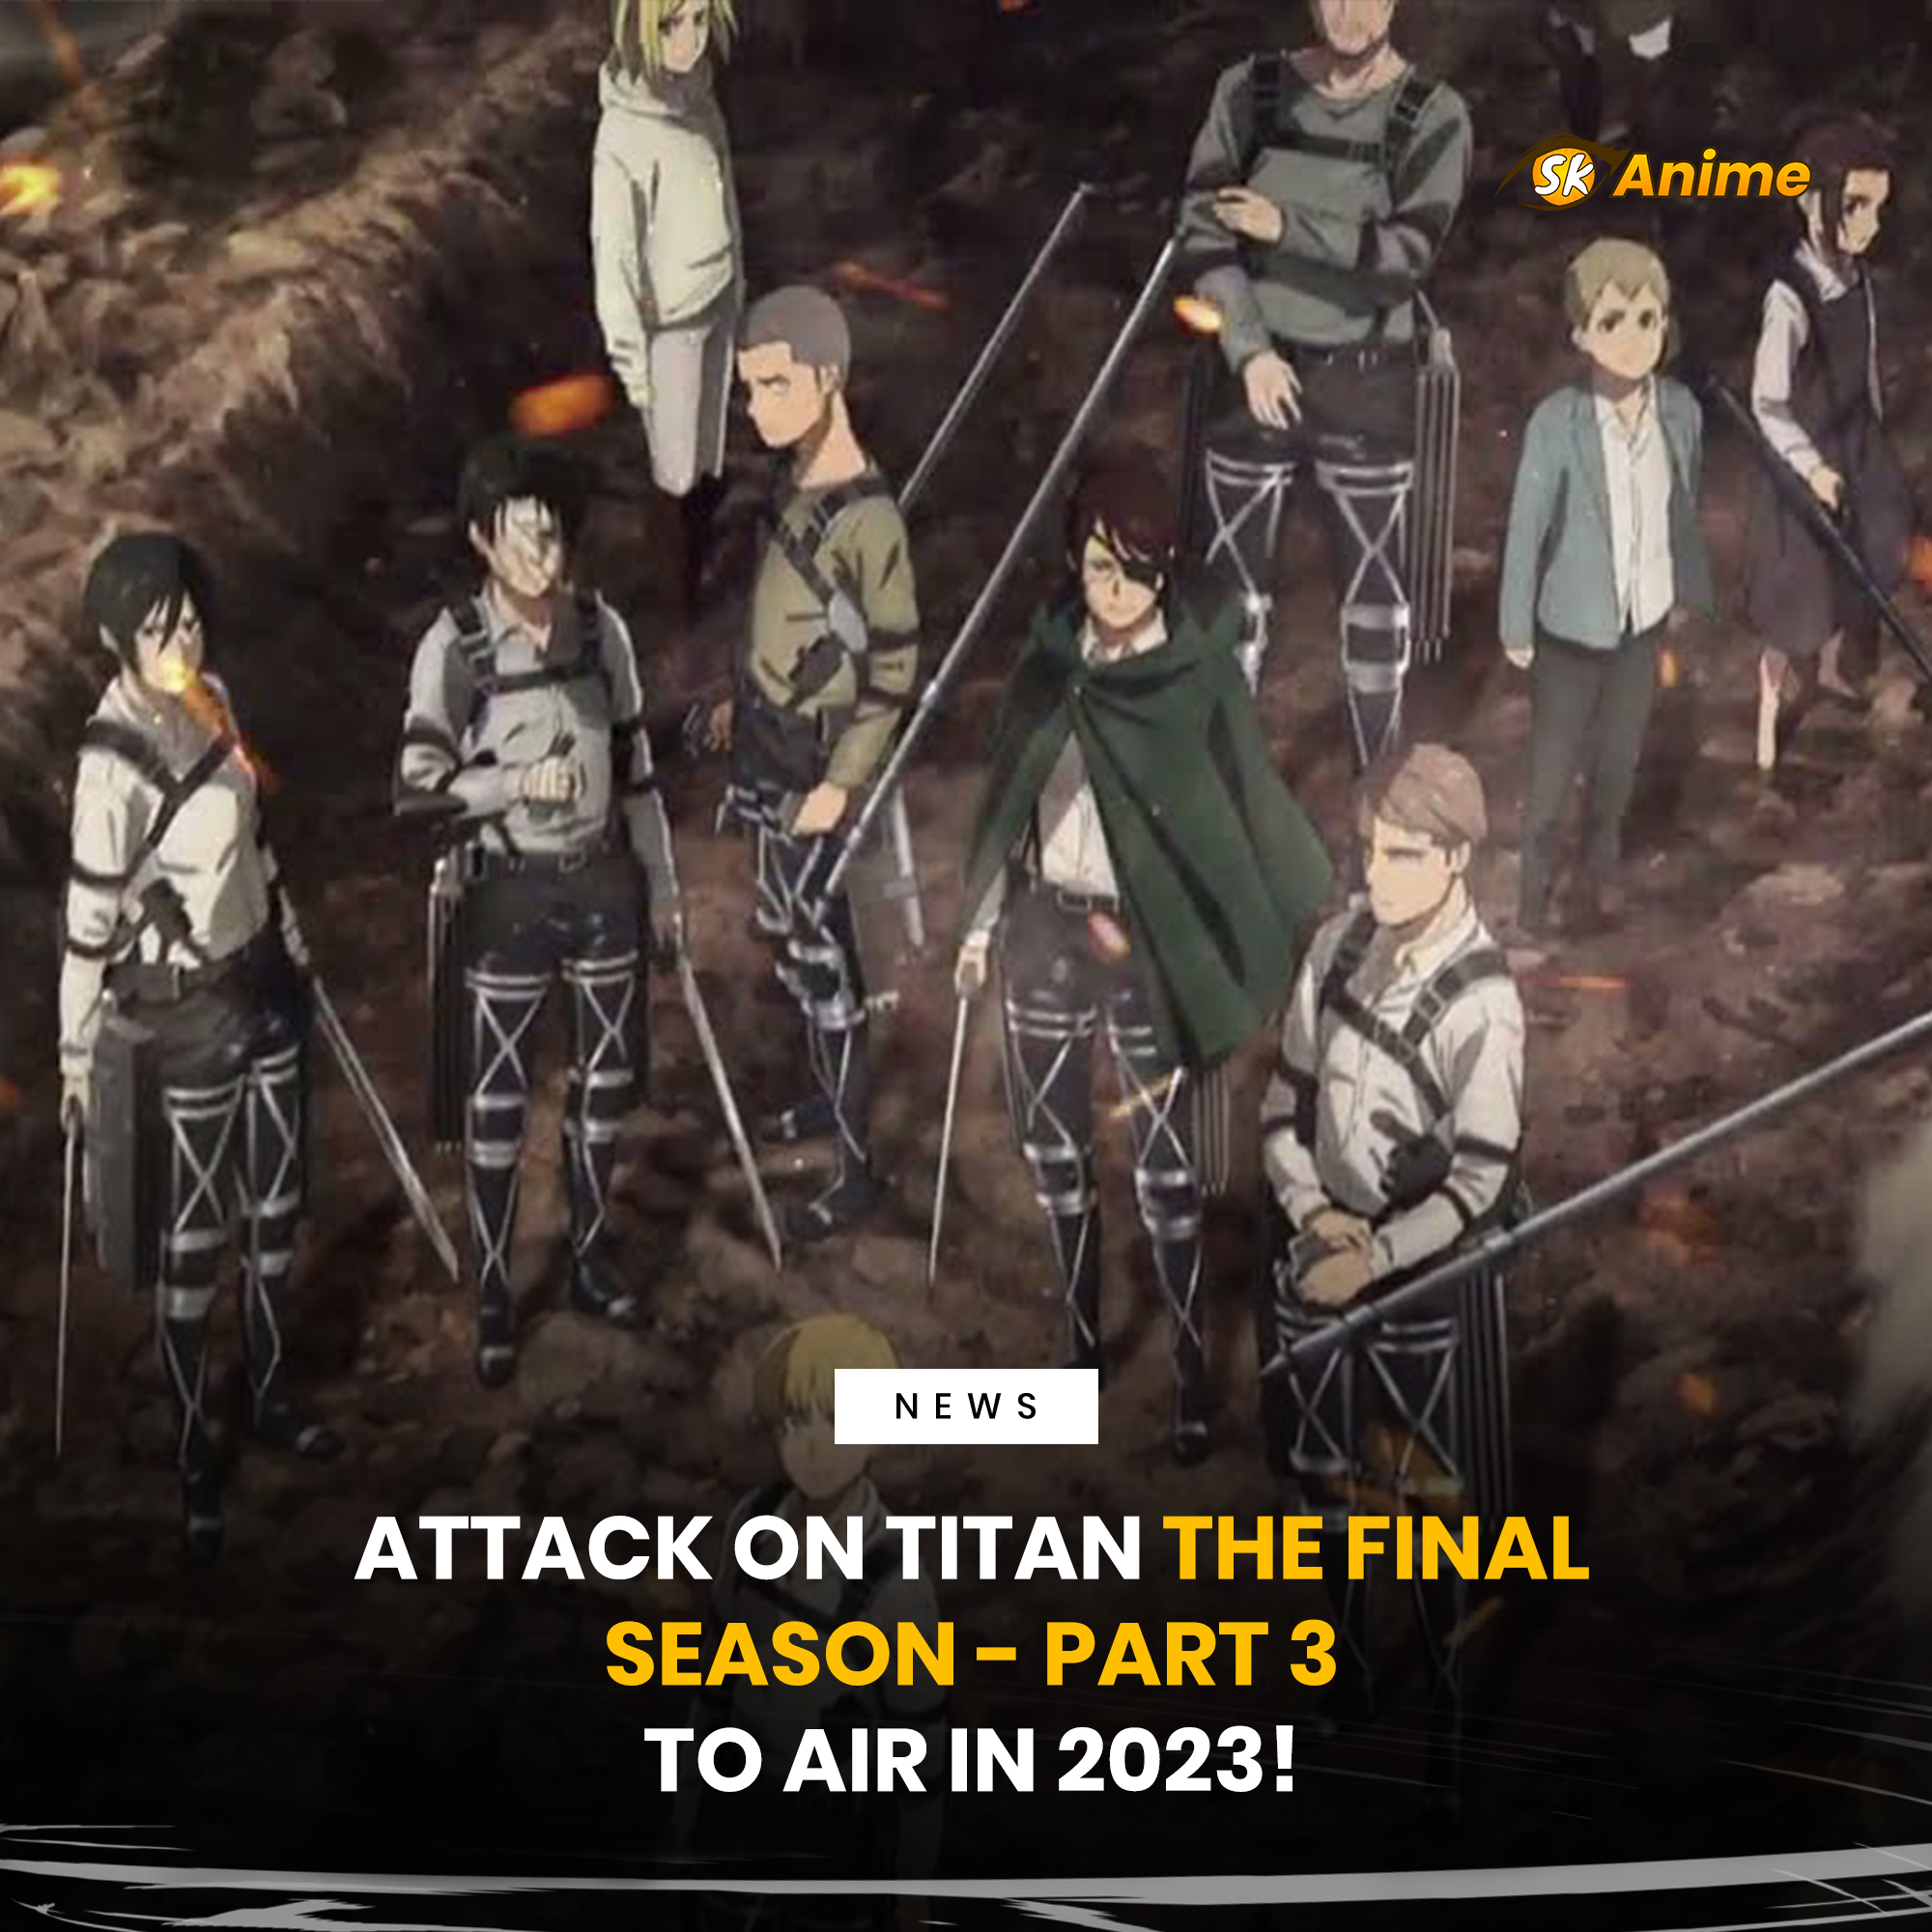 Animemes Nation - Attack on Titan Final Season Part 3 in 2023😍